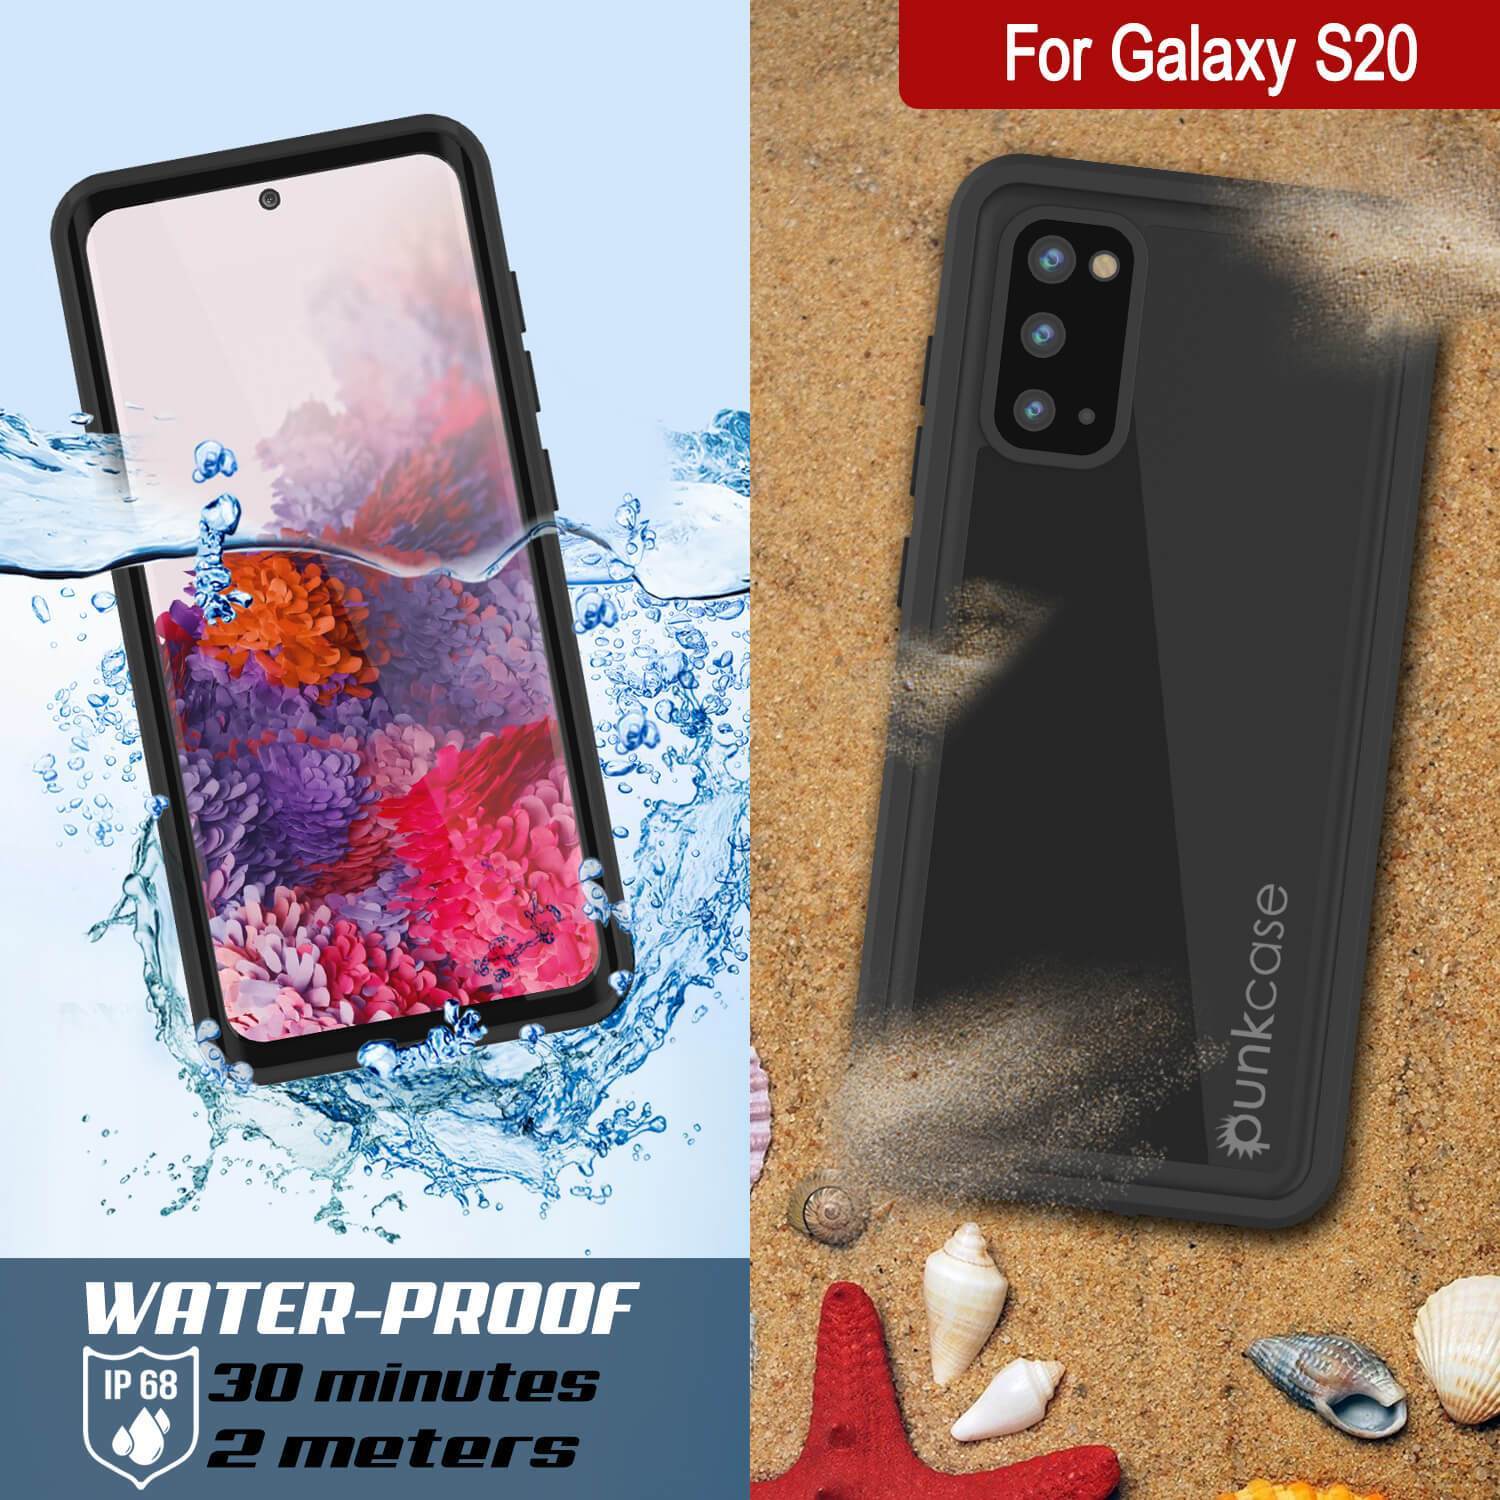 Galaxy S20 Waterproof Case PunkCase StudStar Clear Thin 6.6ft Underwater IP68 Shock/Snow Proof